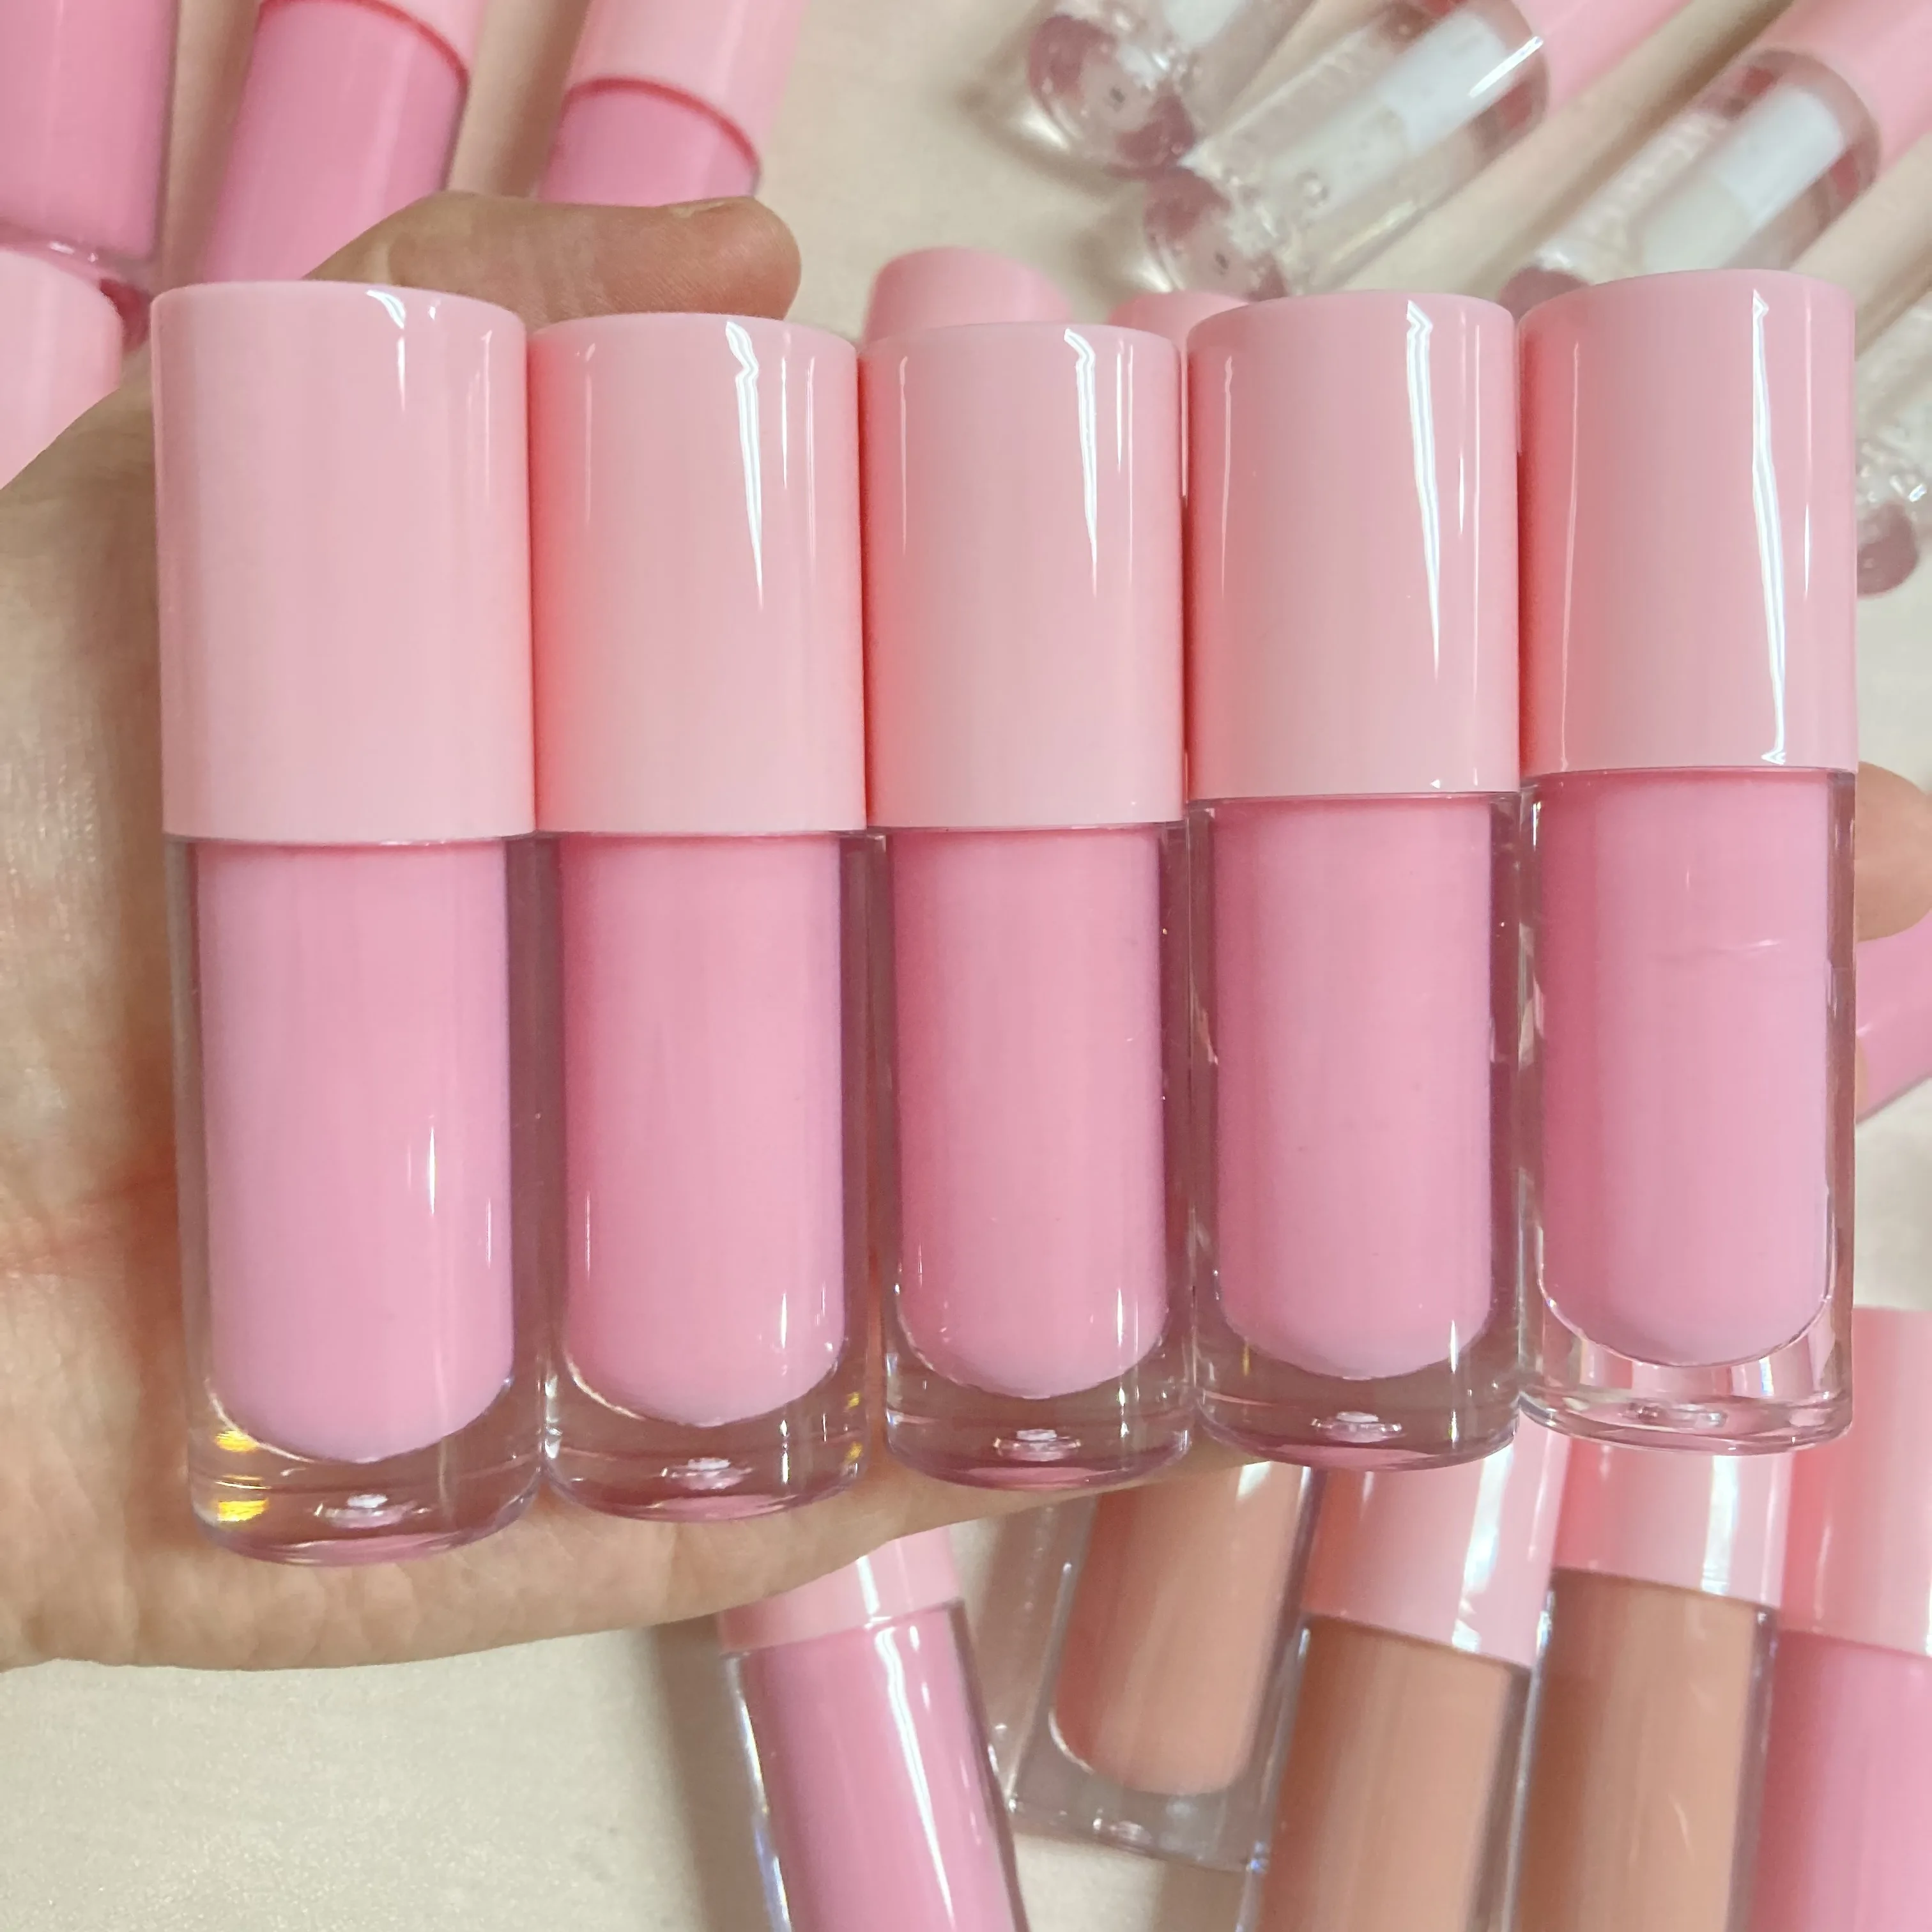 

Popular makeup wholesale vegan nude pink private label shea butter lip gloss